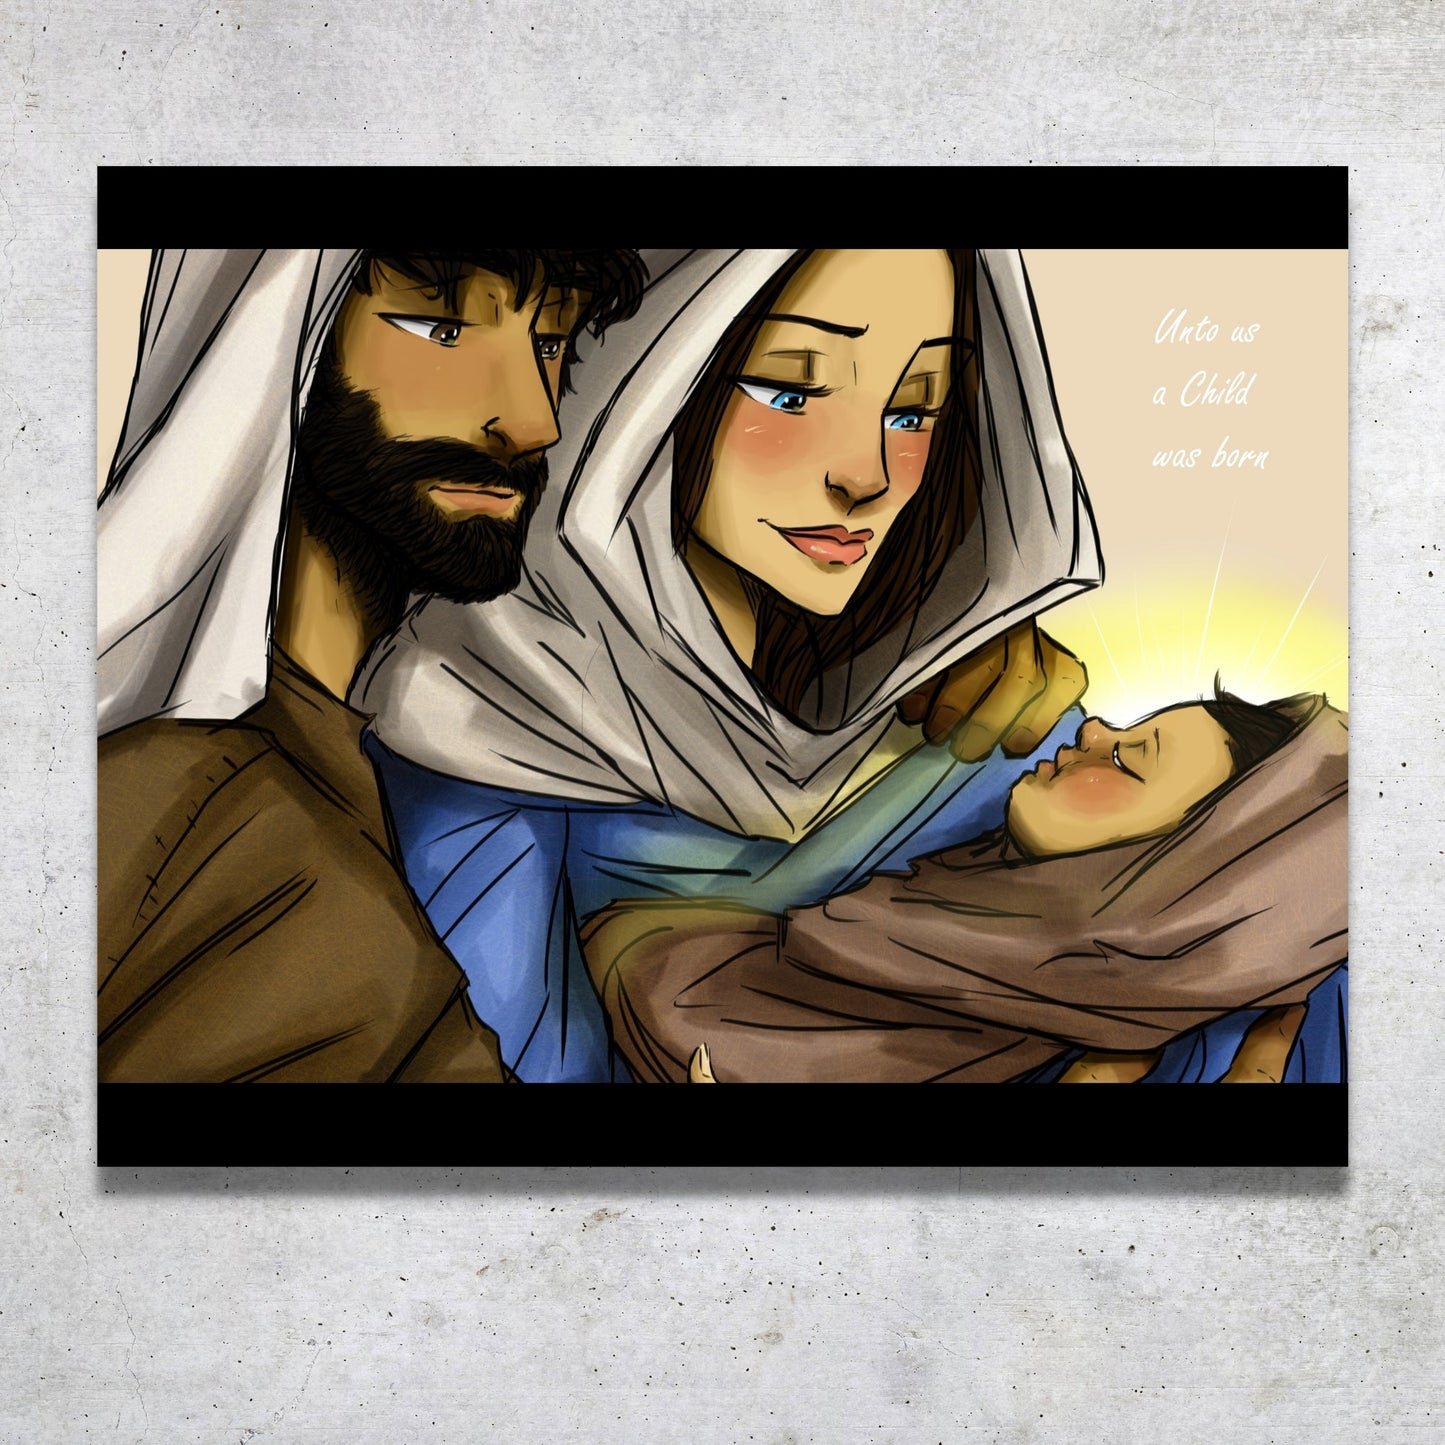 Baby Jesus, Mary, & Joseph Original Art | Inspirational Art Print | Reads... Unto us a Child was born | art by California artist Megan B | oak7west.com